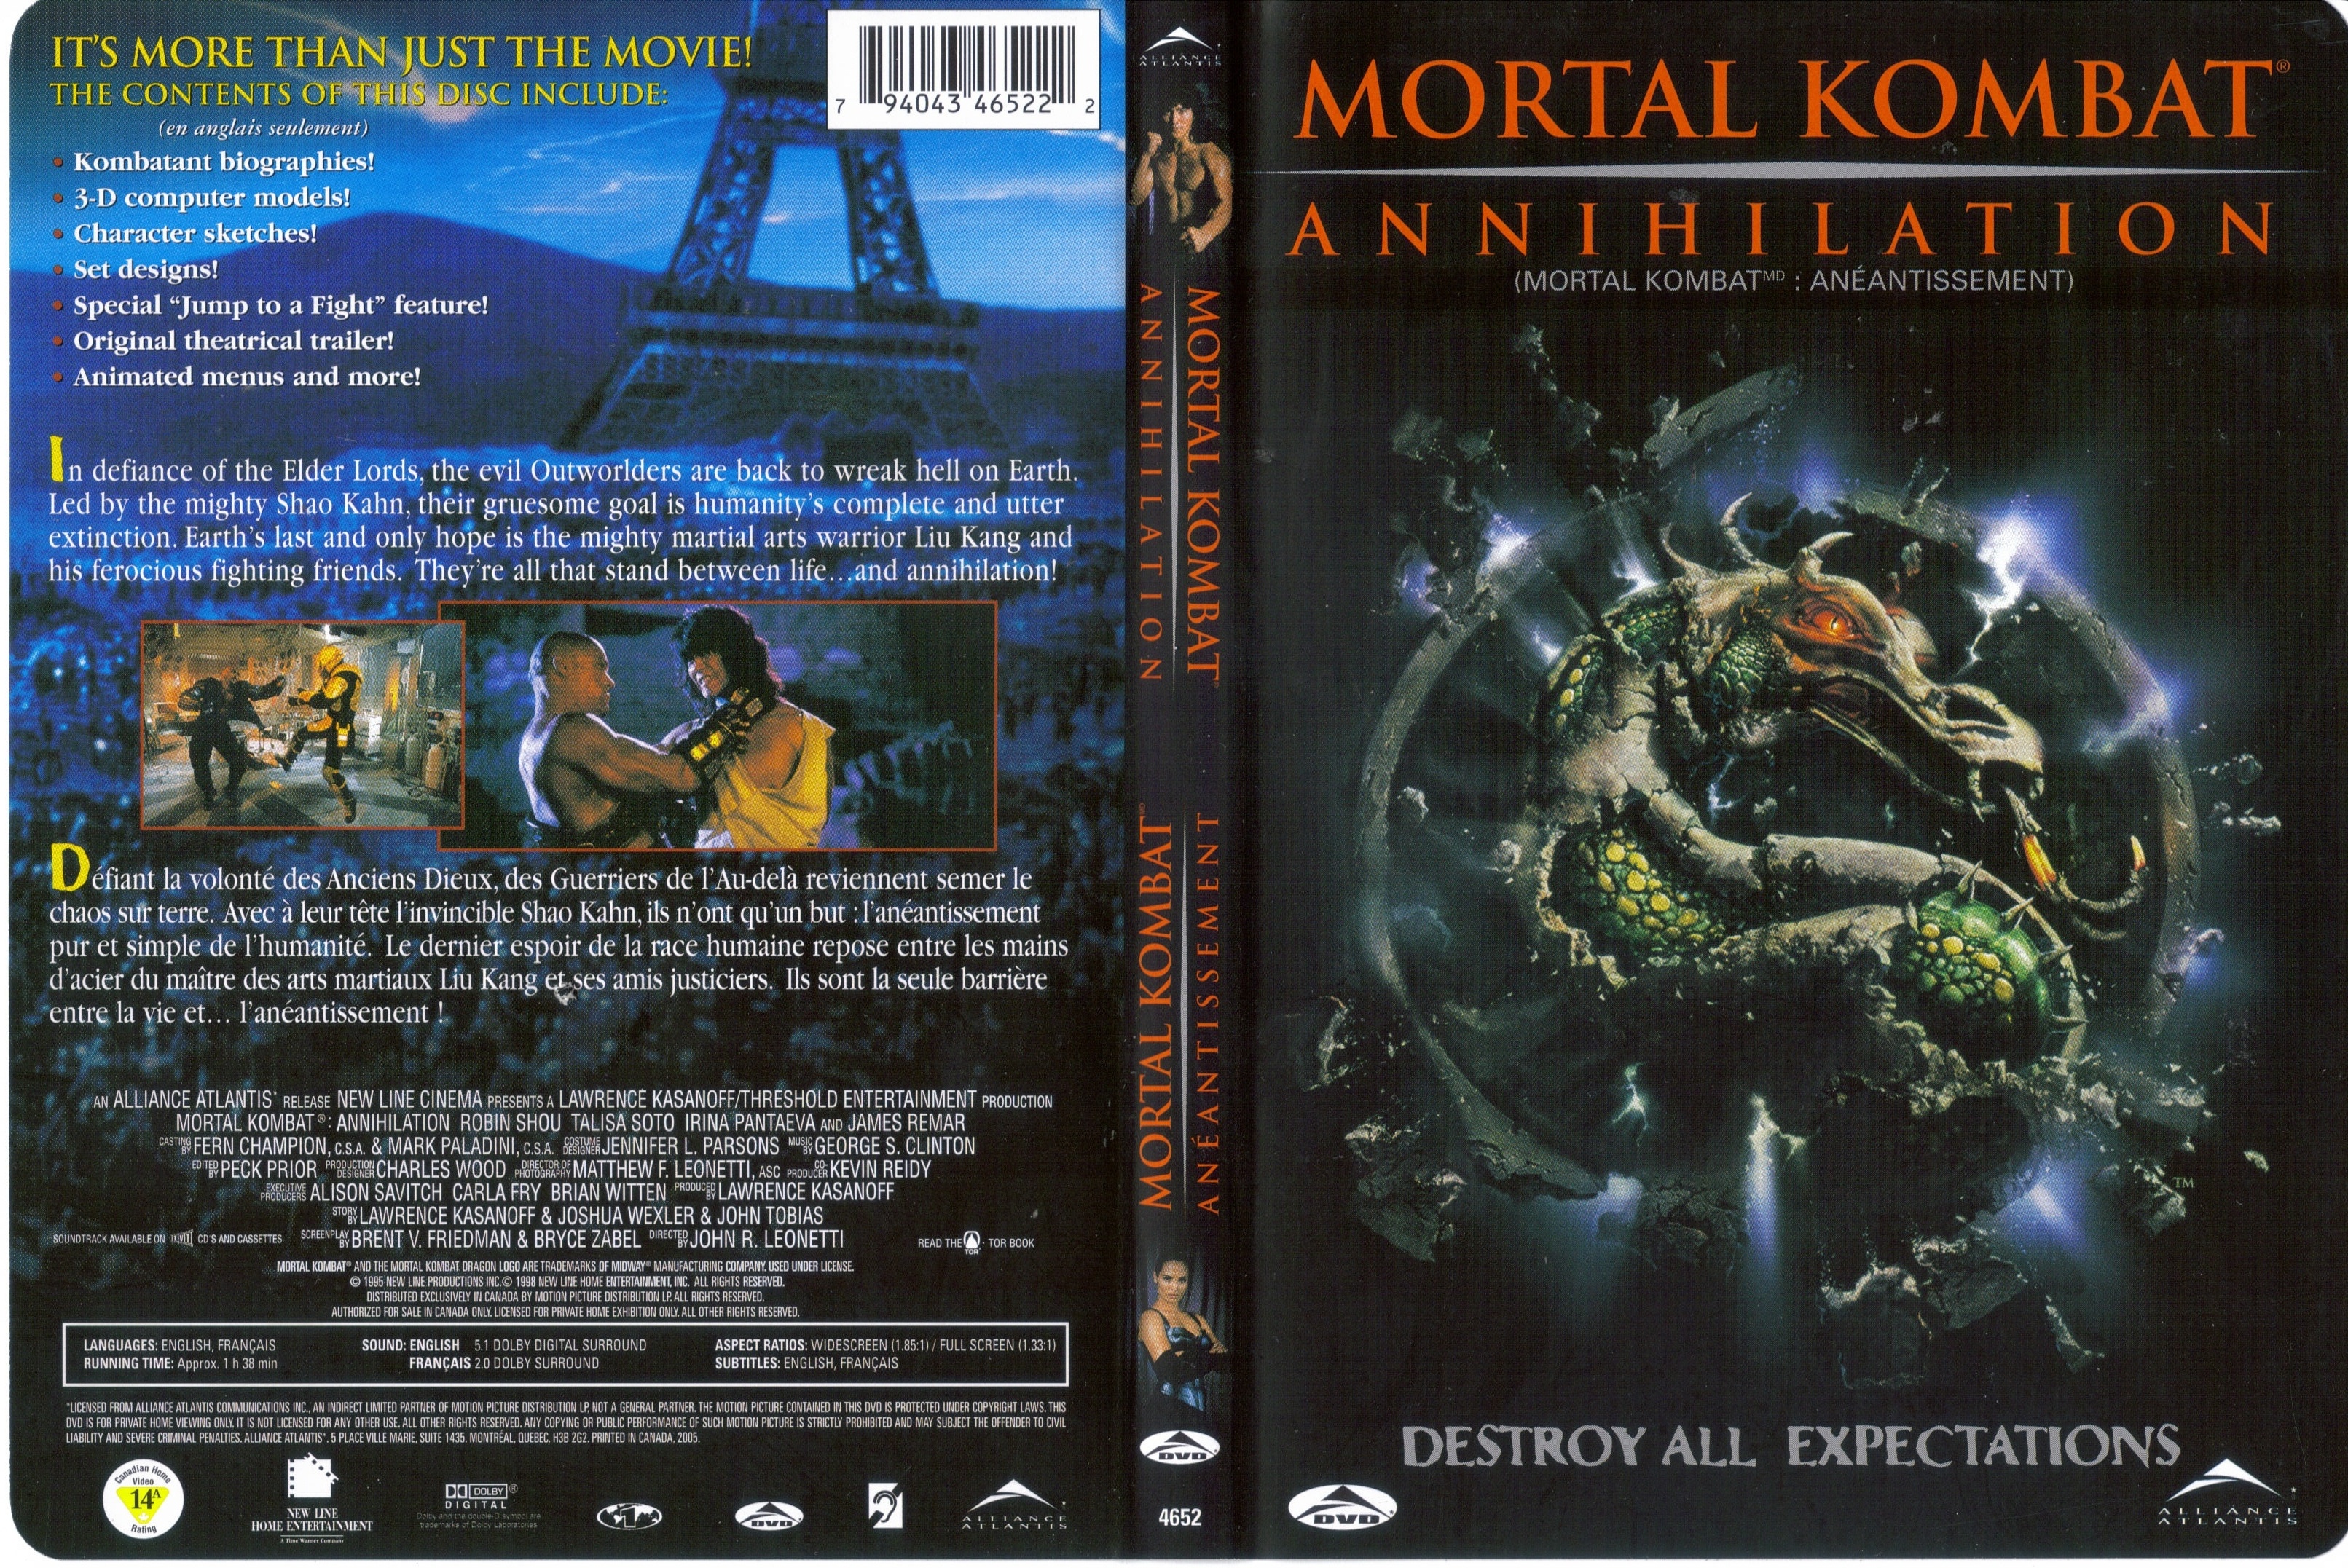 Jaquette DVD Mortal Kombat 2 - anantissement (Canadienne)